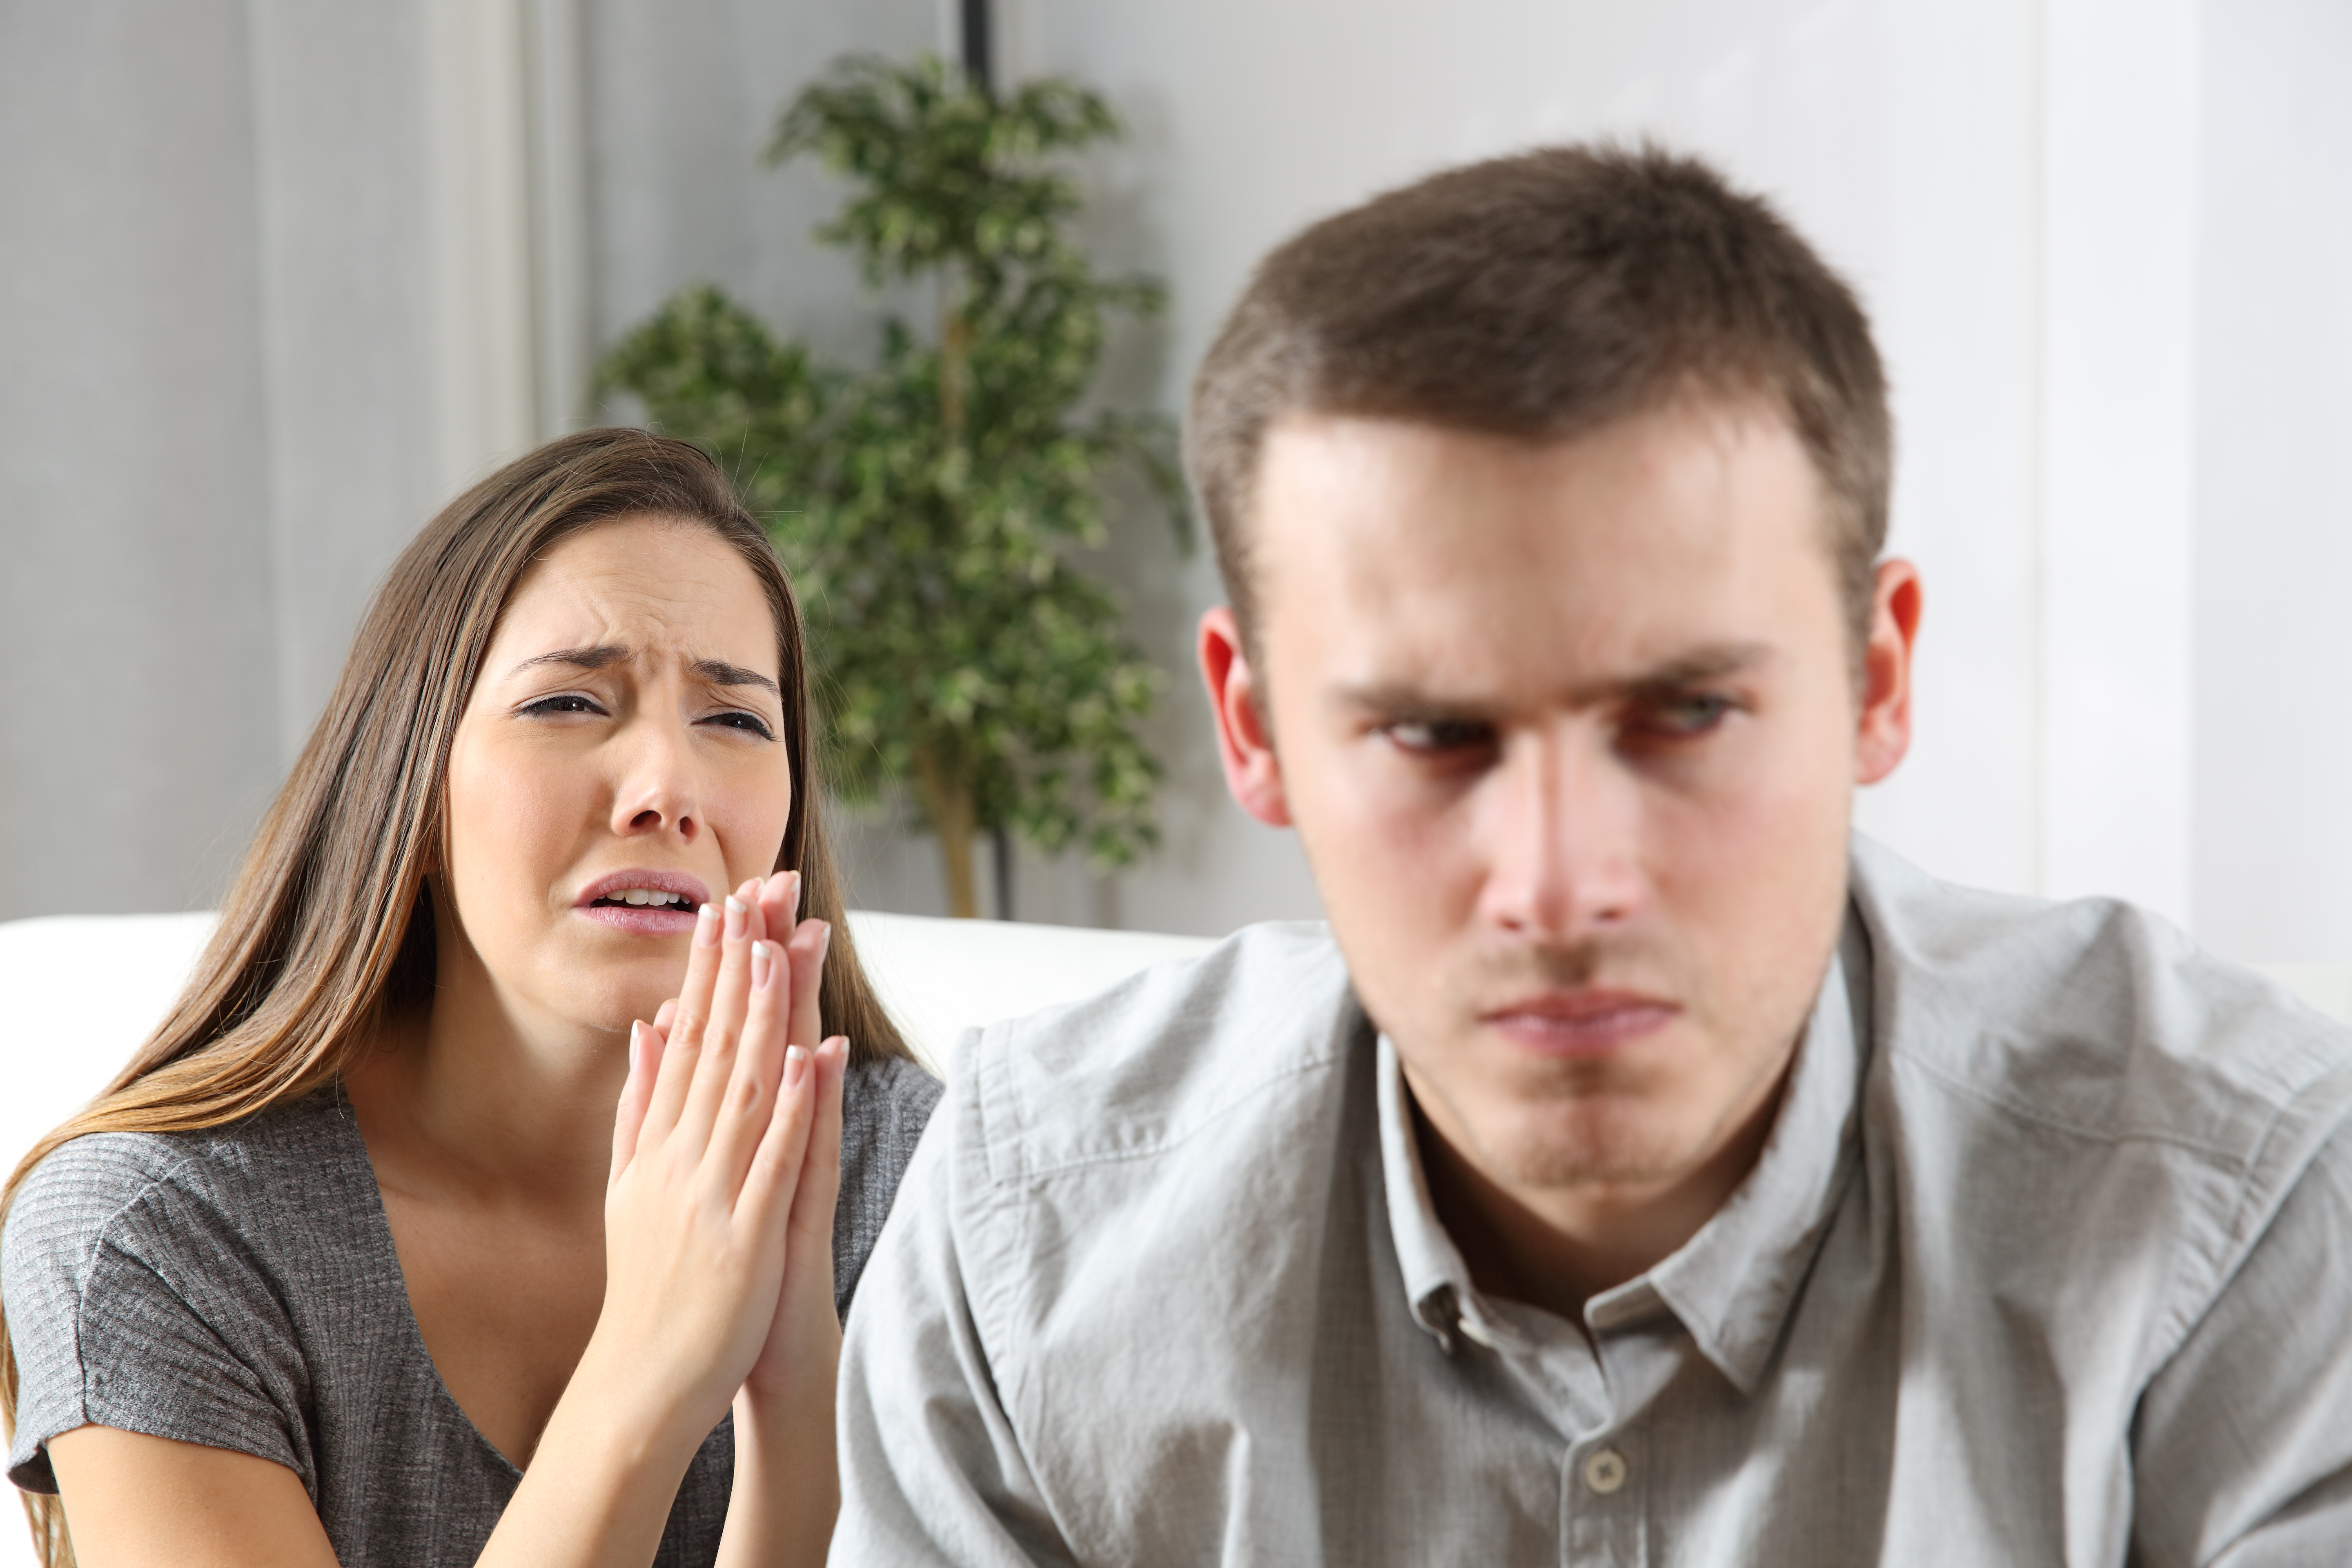 Woman asking a man for forgiveness | Source: Shutterstock